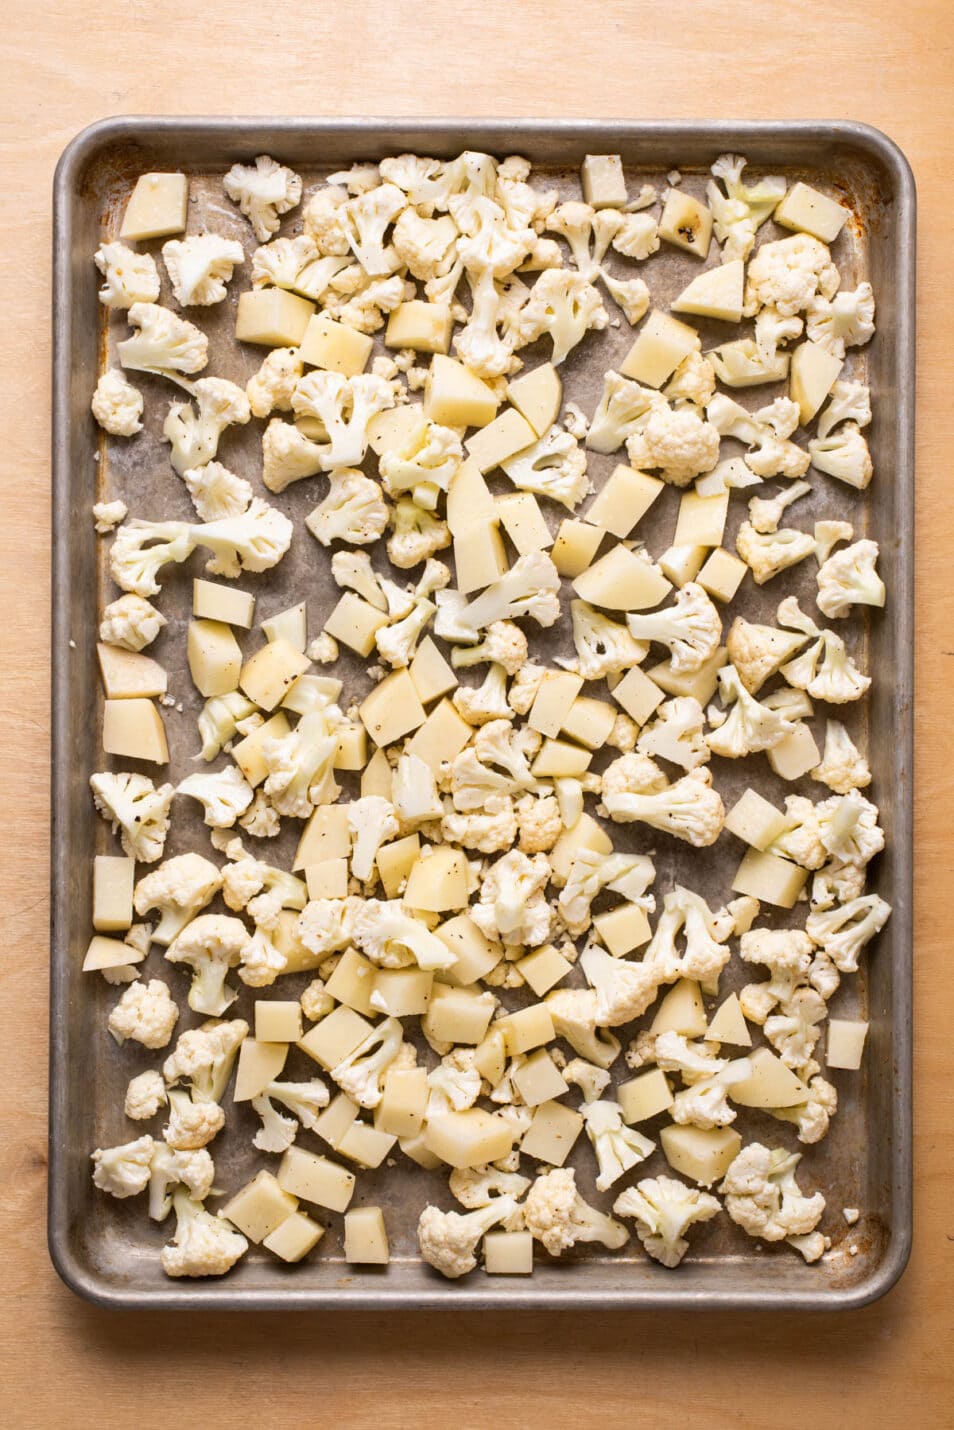 Chopped potatoes and cauliflower on a baking sheet.